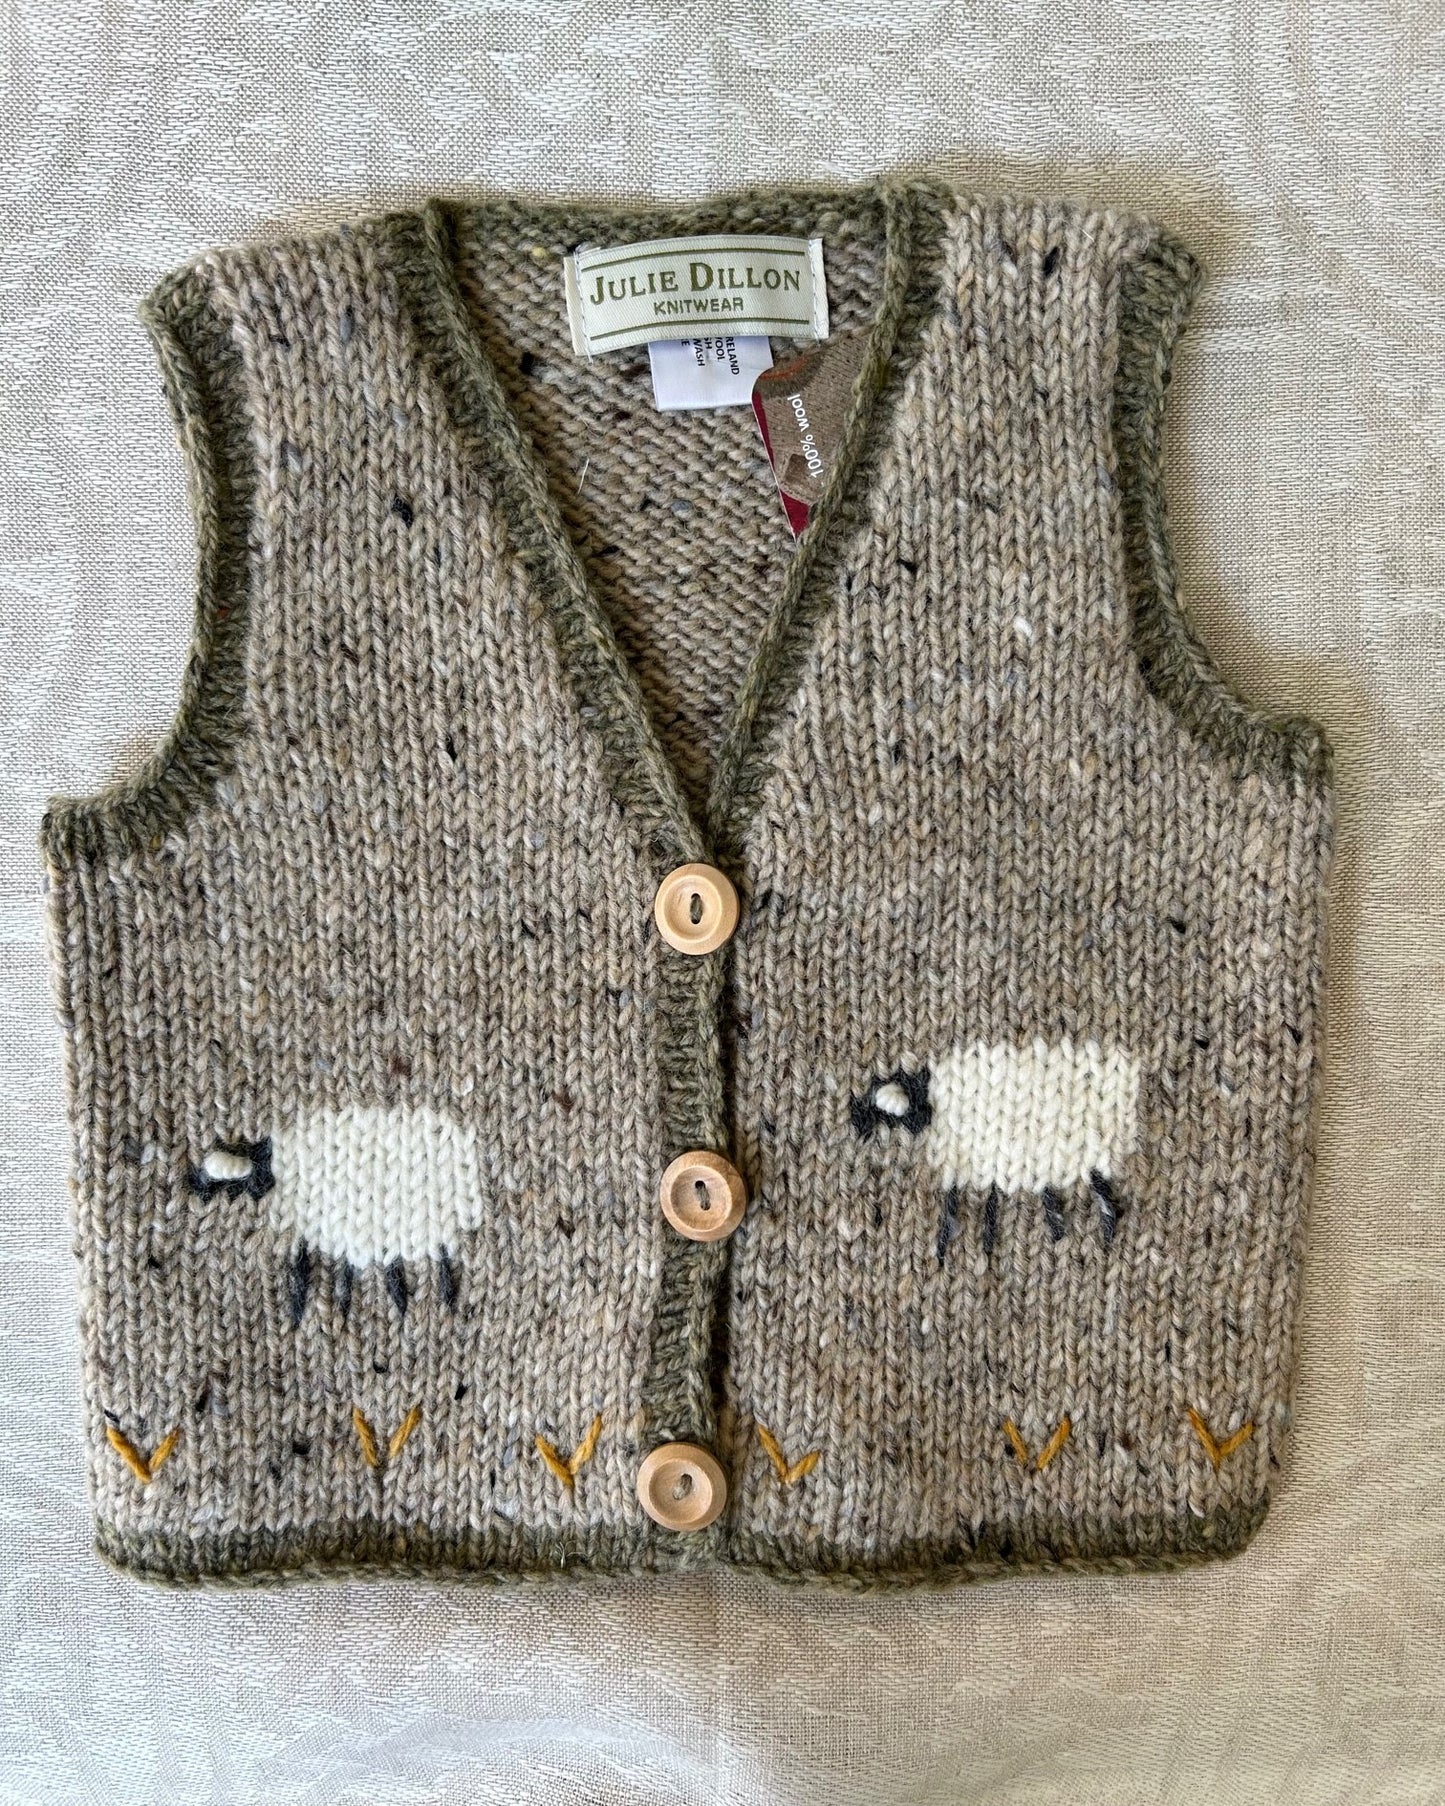 Children's Merino Wool Vests by Julie Dillon